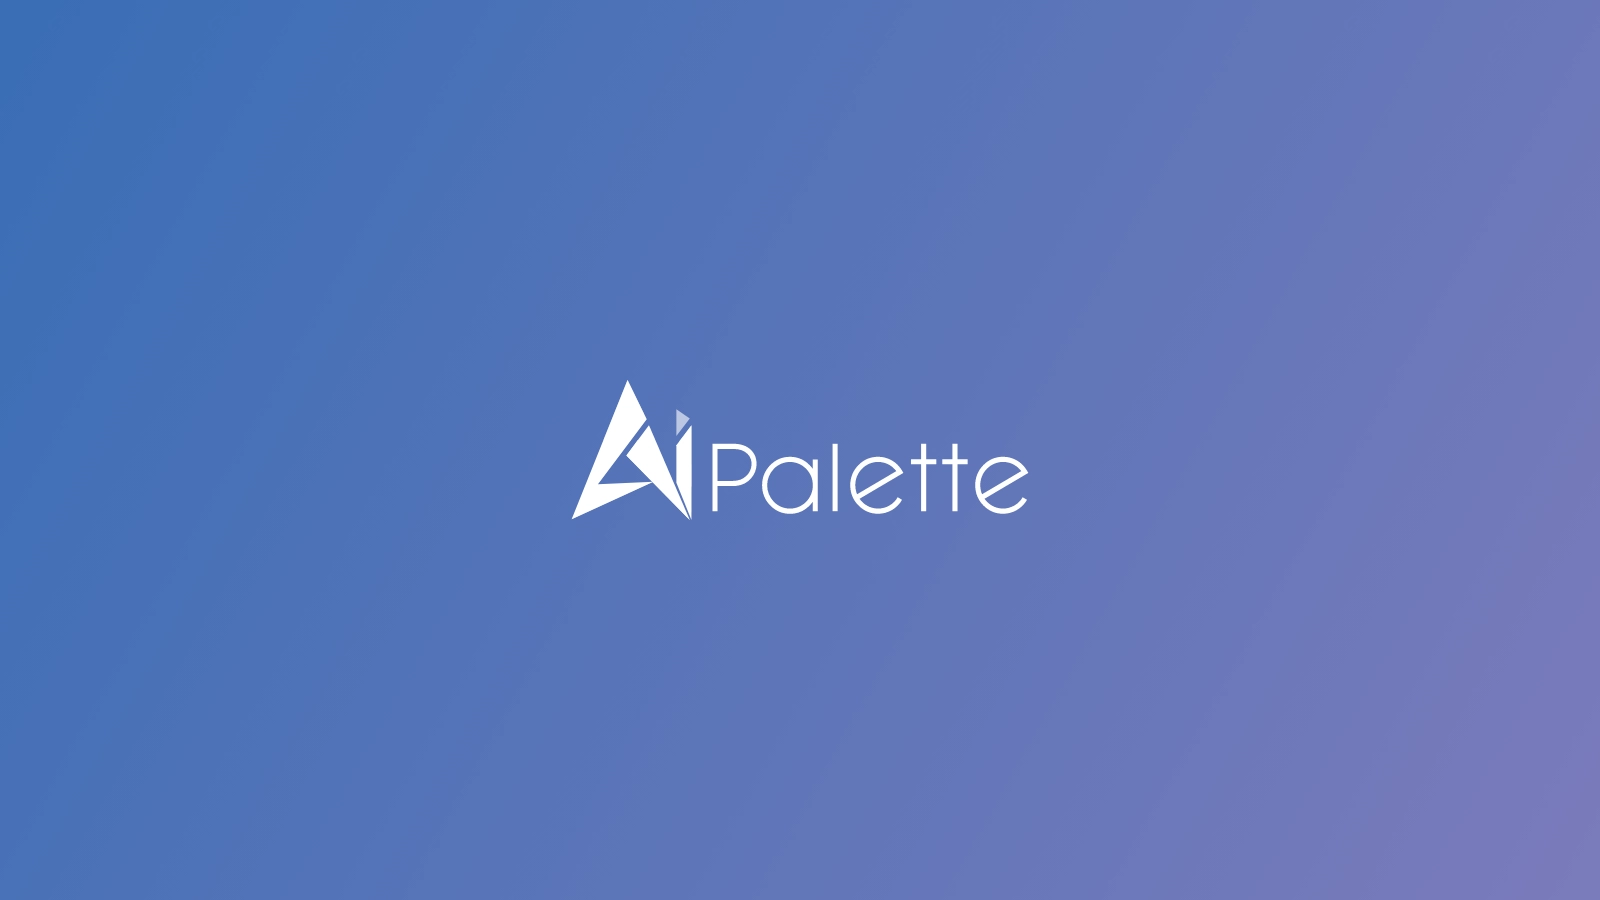 AI Palette - Visual Identity (Logotype)